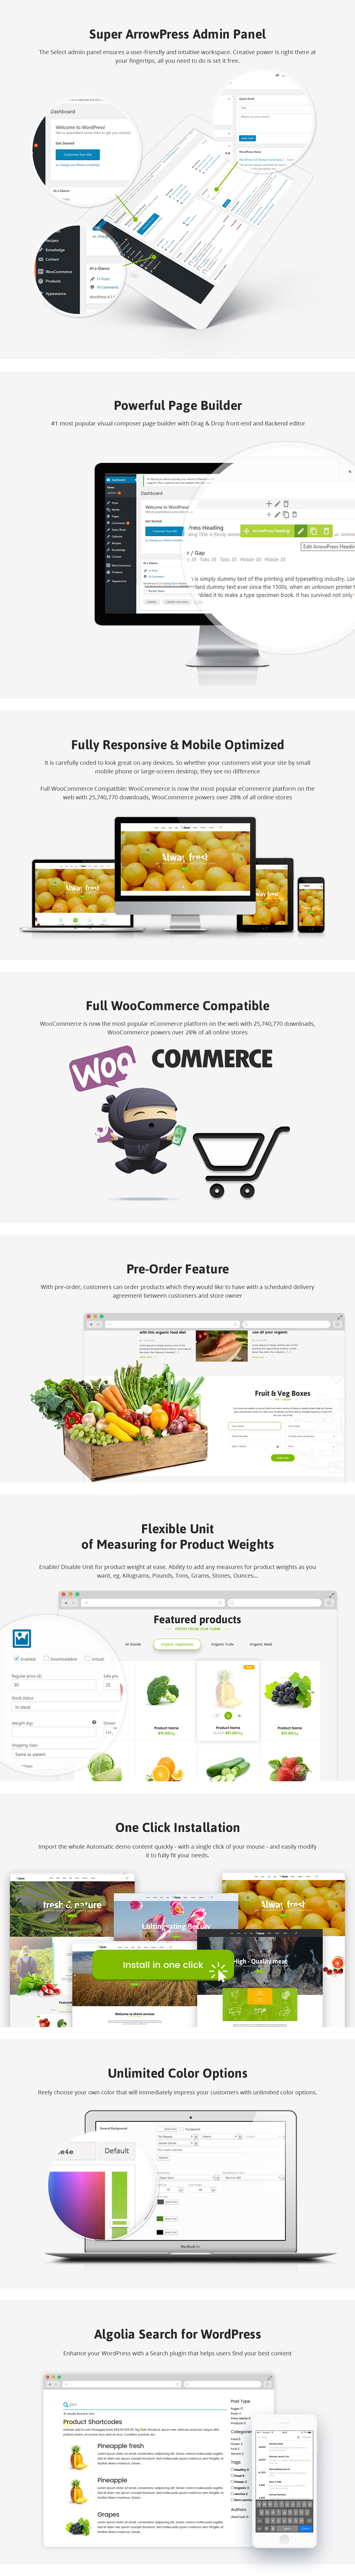 eFarm - A Multipurpose Food & Farm WordPress Theme - 7